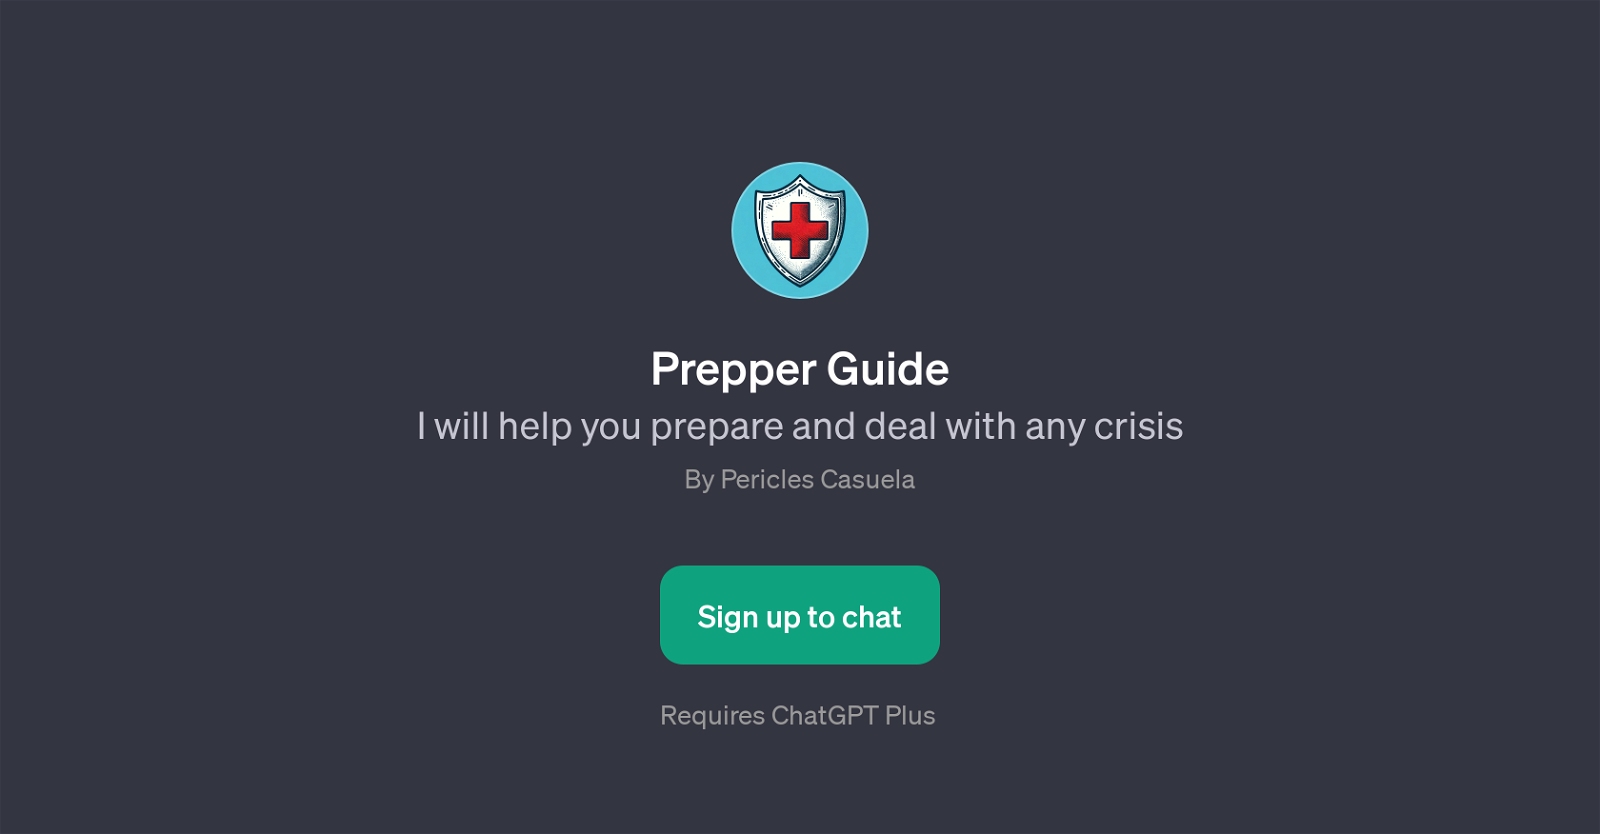 Prepper Guide website